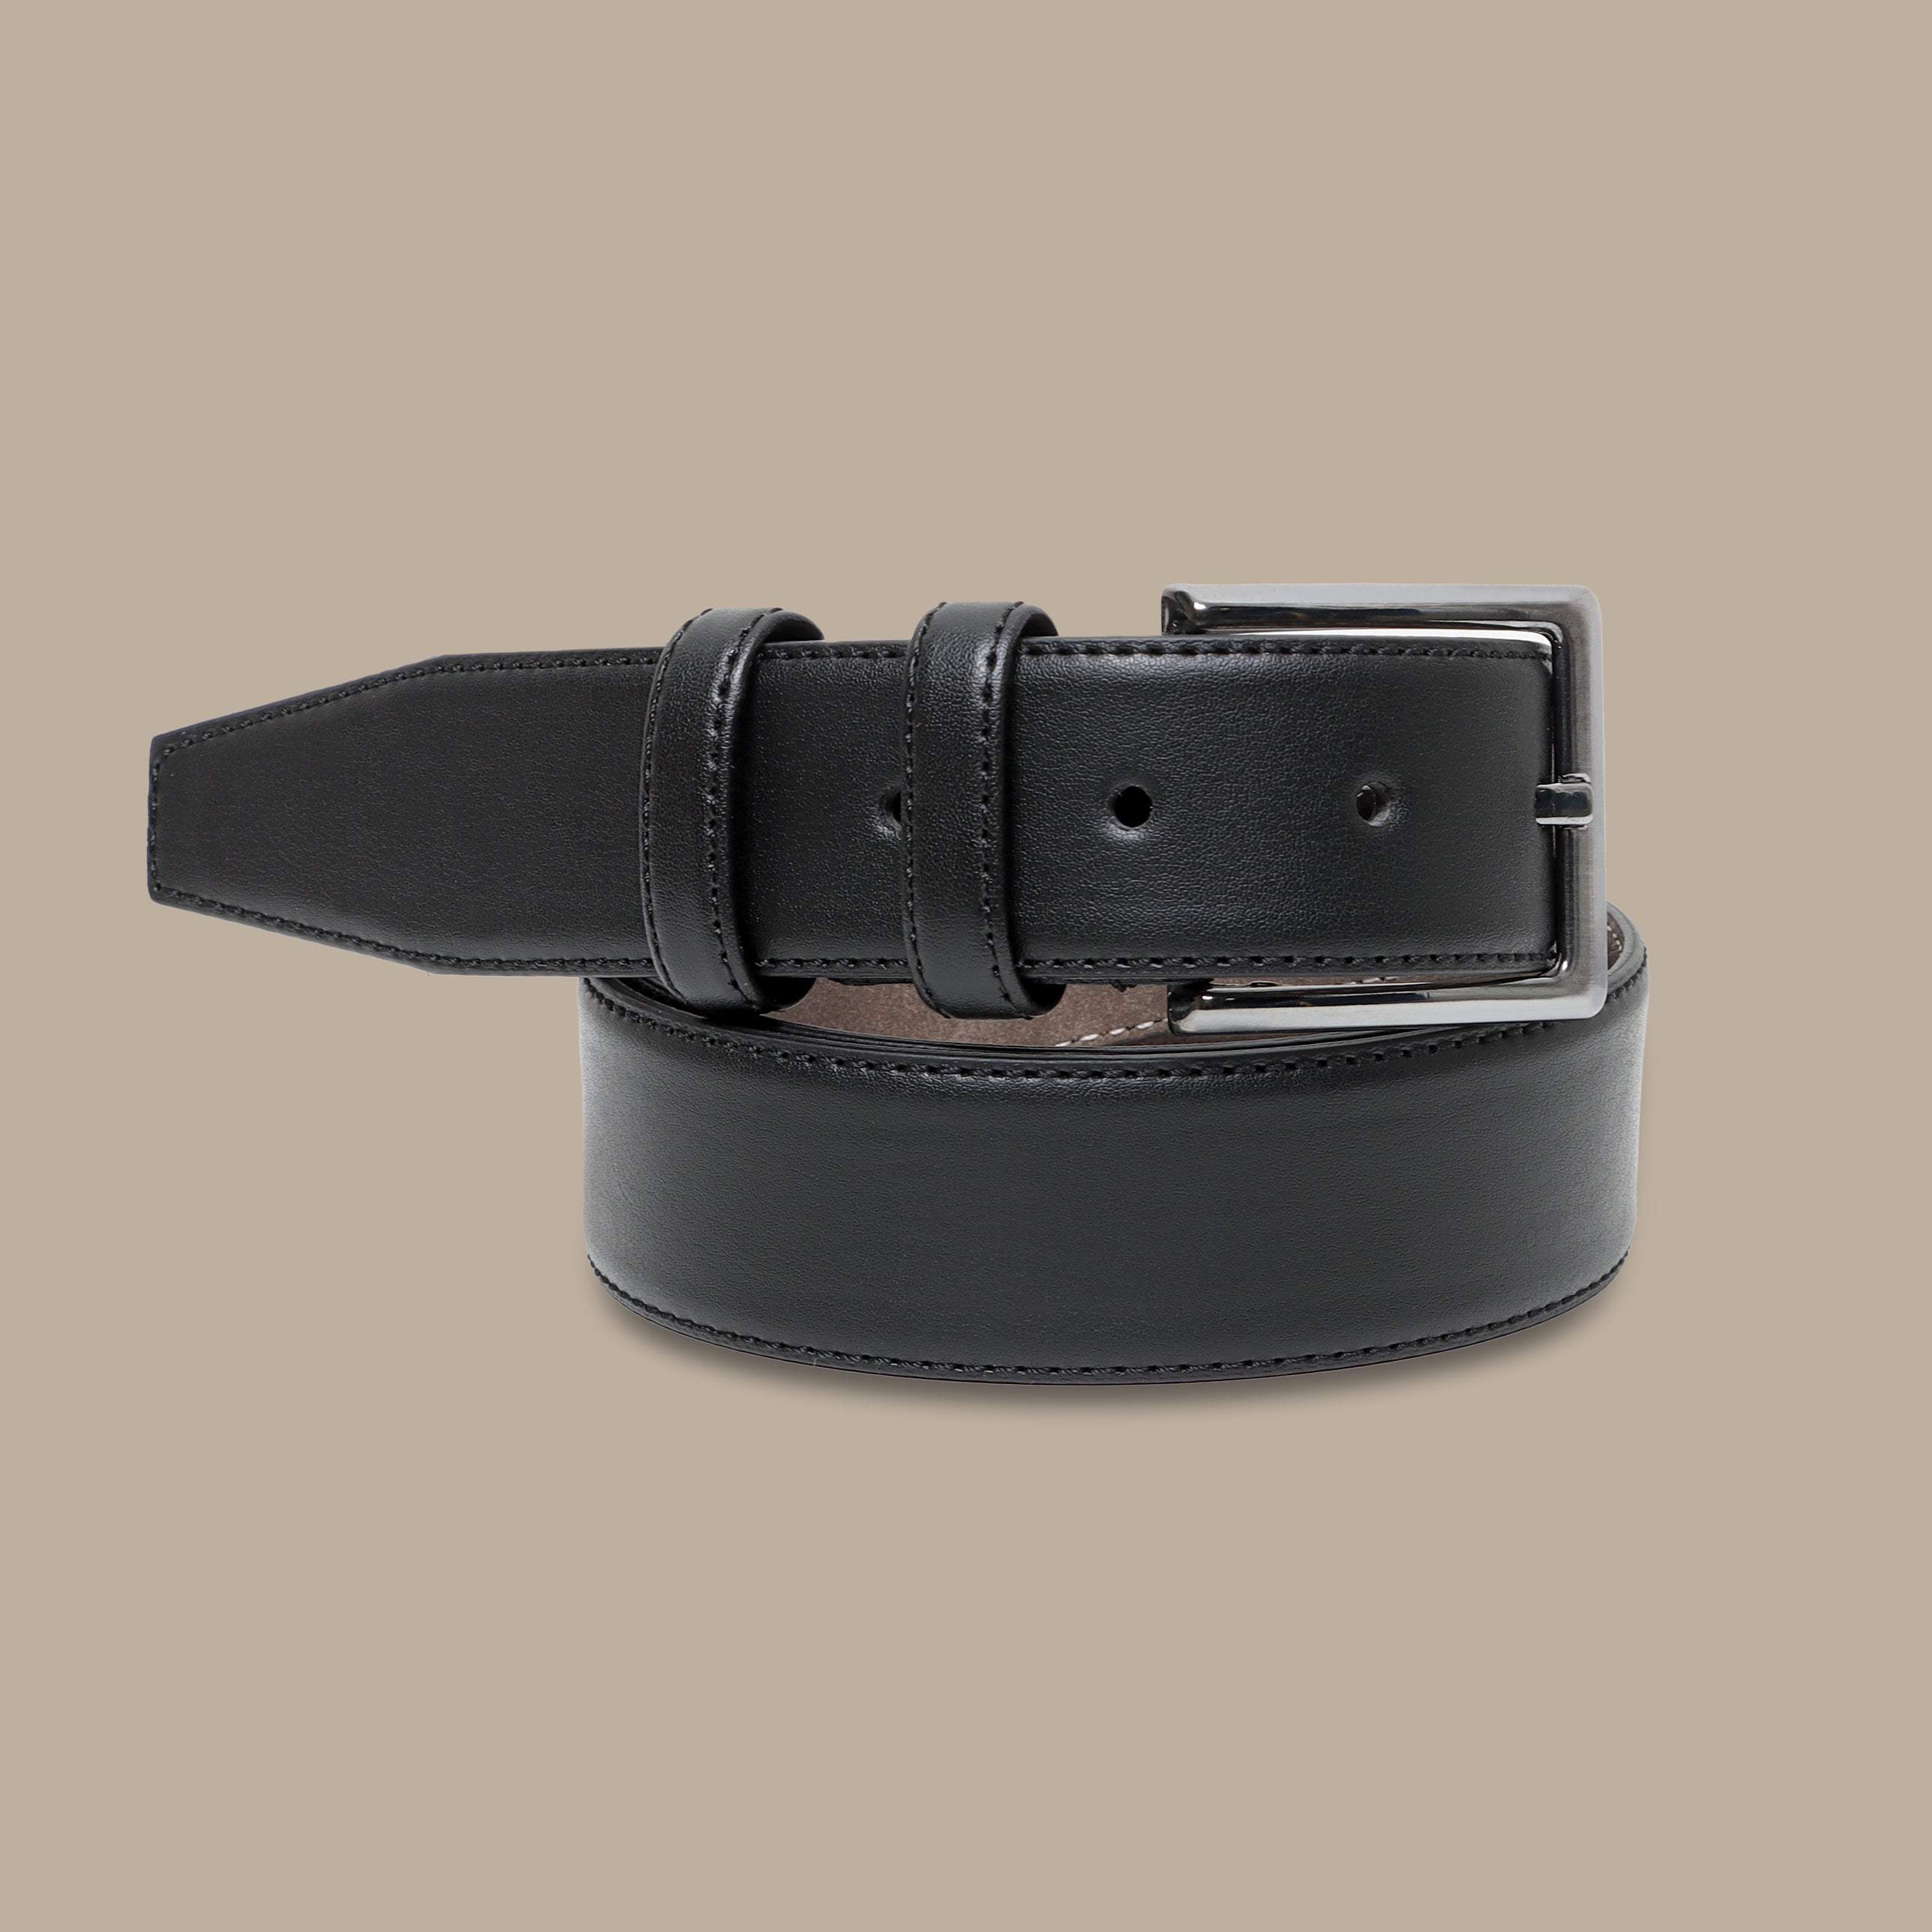 Ebony Essential: Classic Black PU Belt for Timeless Wardrobe Staples